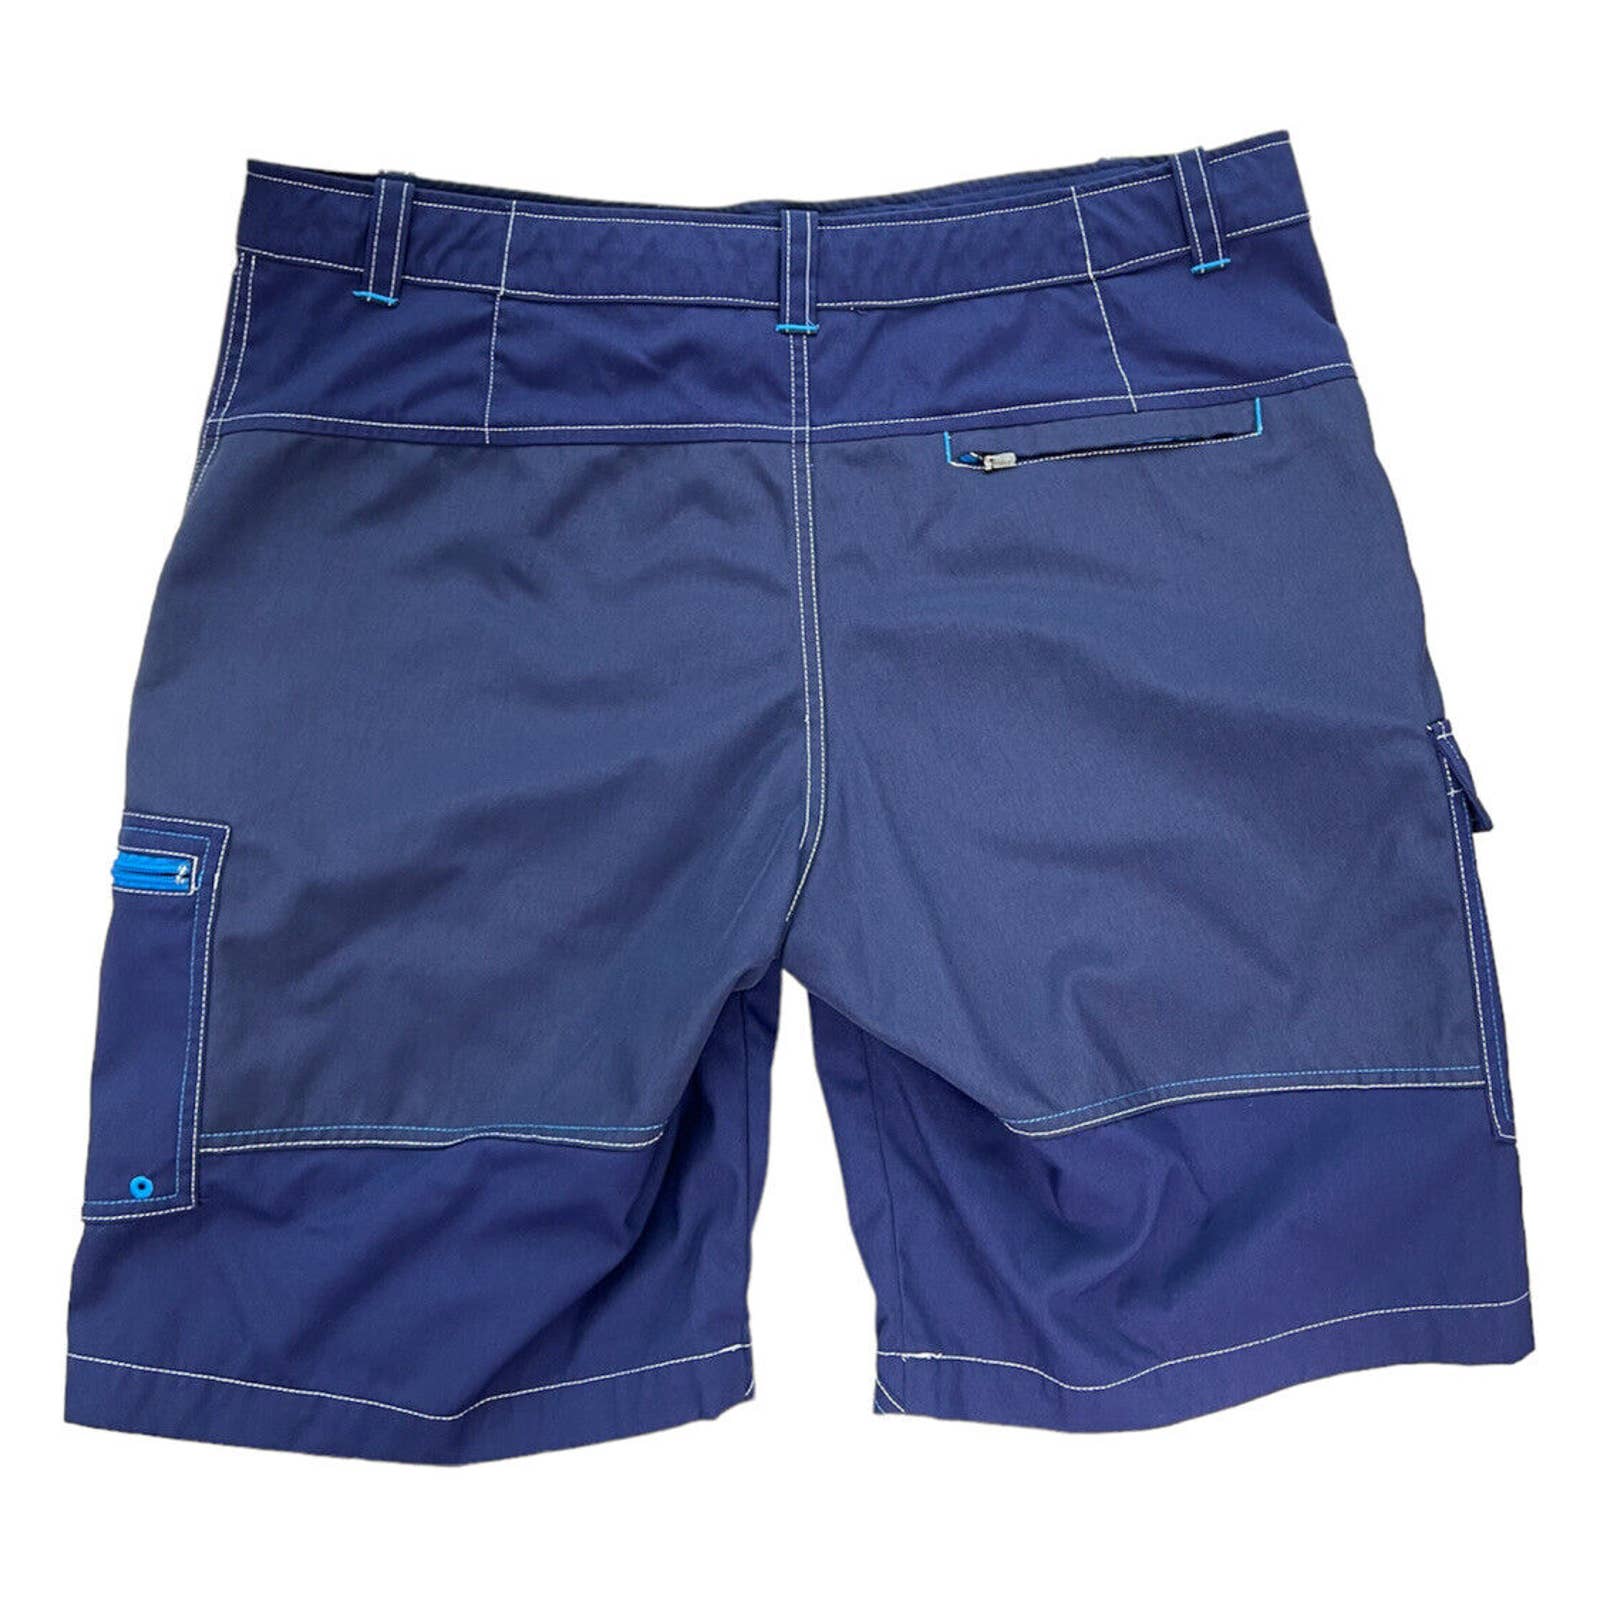 Sperry Top-Sider Cargo Shorts Men’s Large Blue Nylon Blend Swim Beach Hybrid